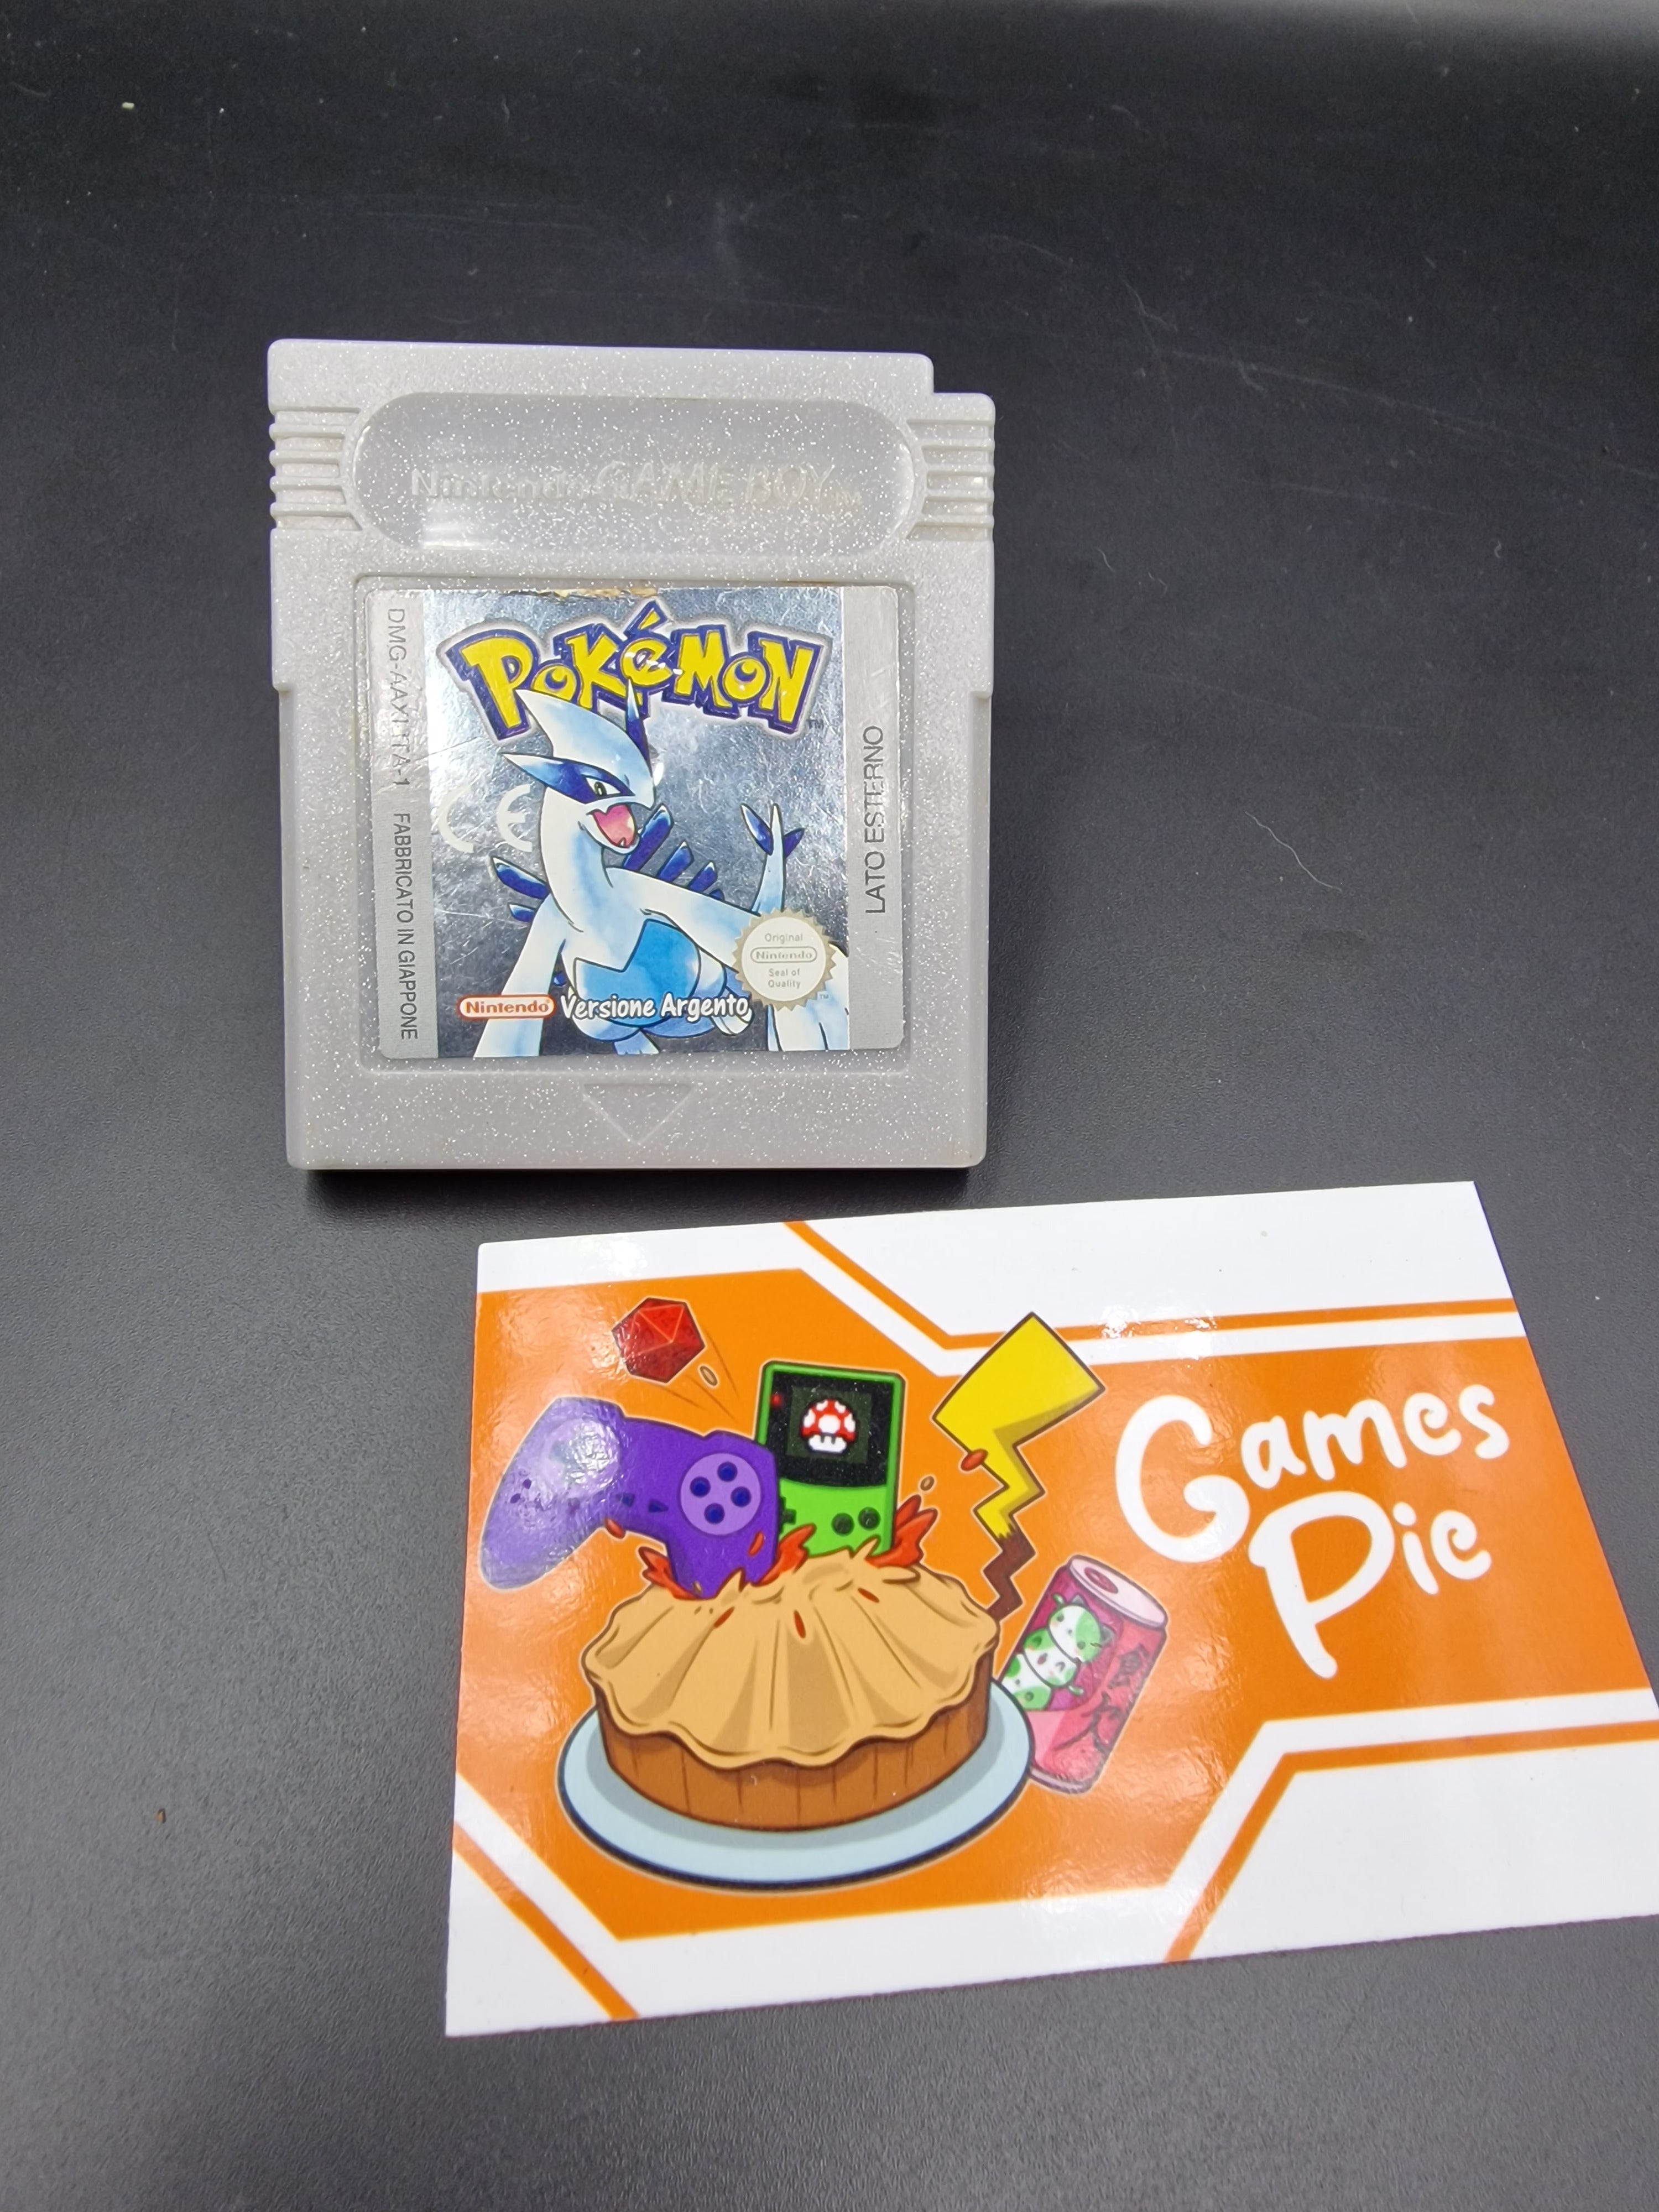 Pokémon Versione Argento Game Boy Color